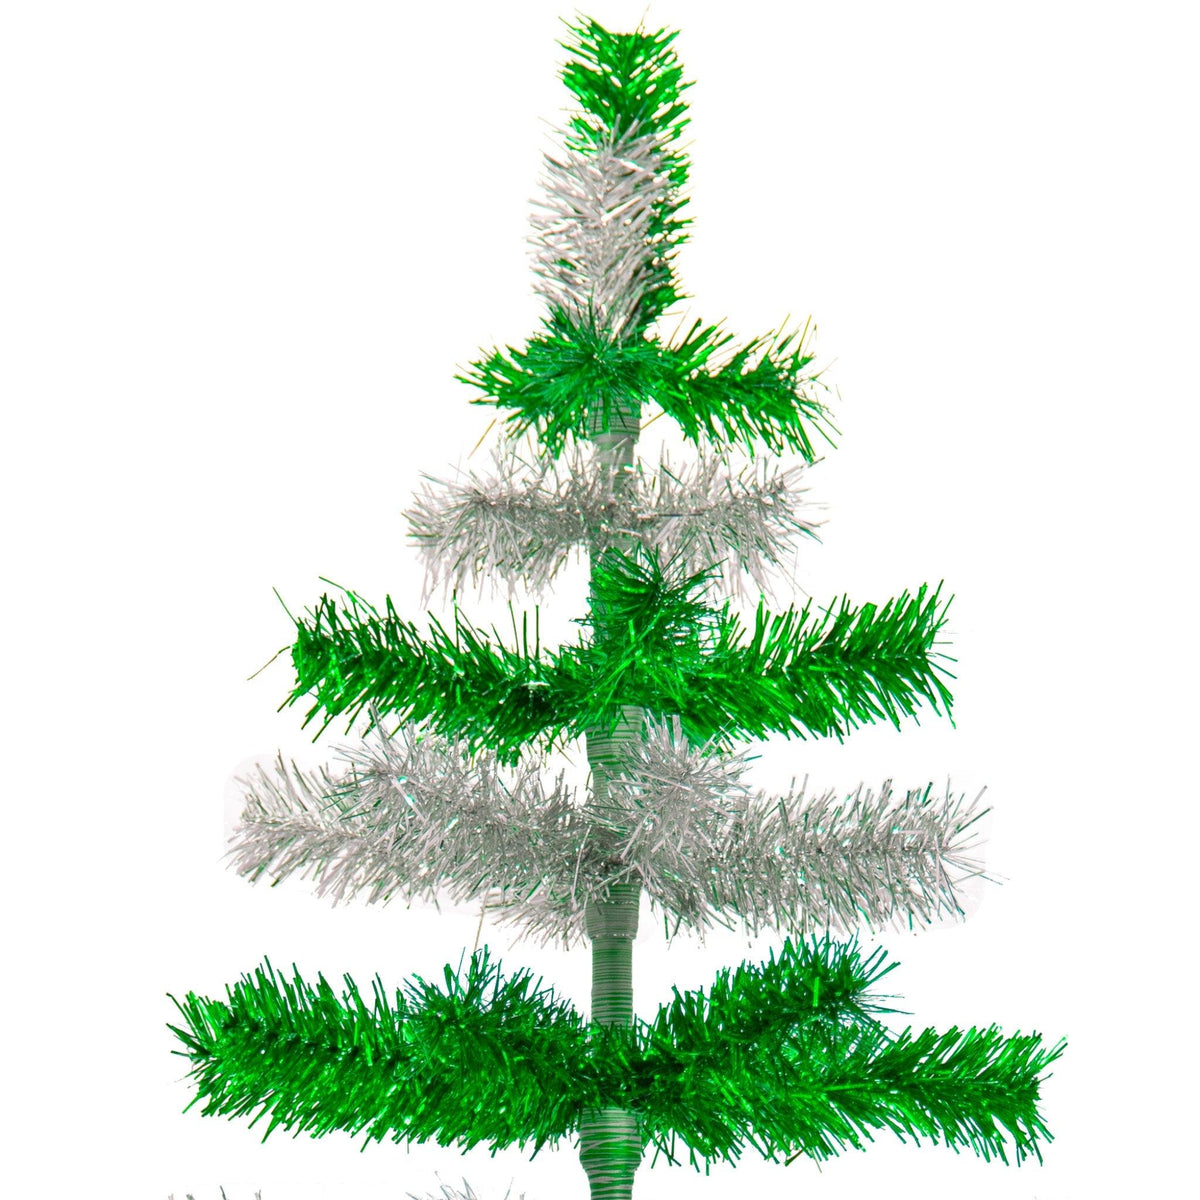 Shiny Green and Metallic Silver Layered Tinsel Christmas Trees on sale at leedisplay.com